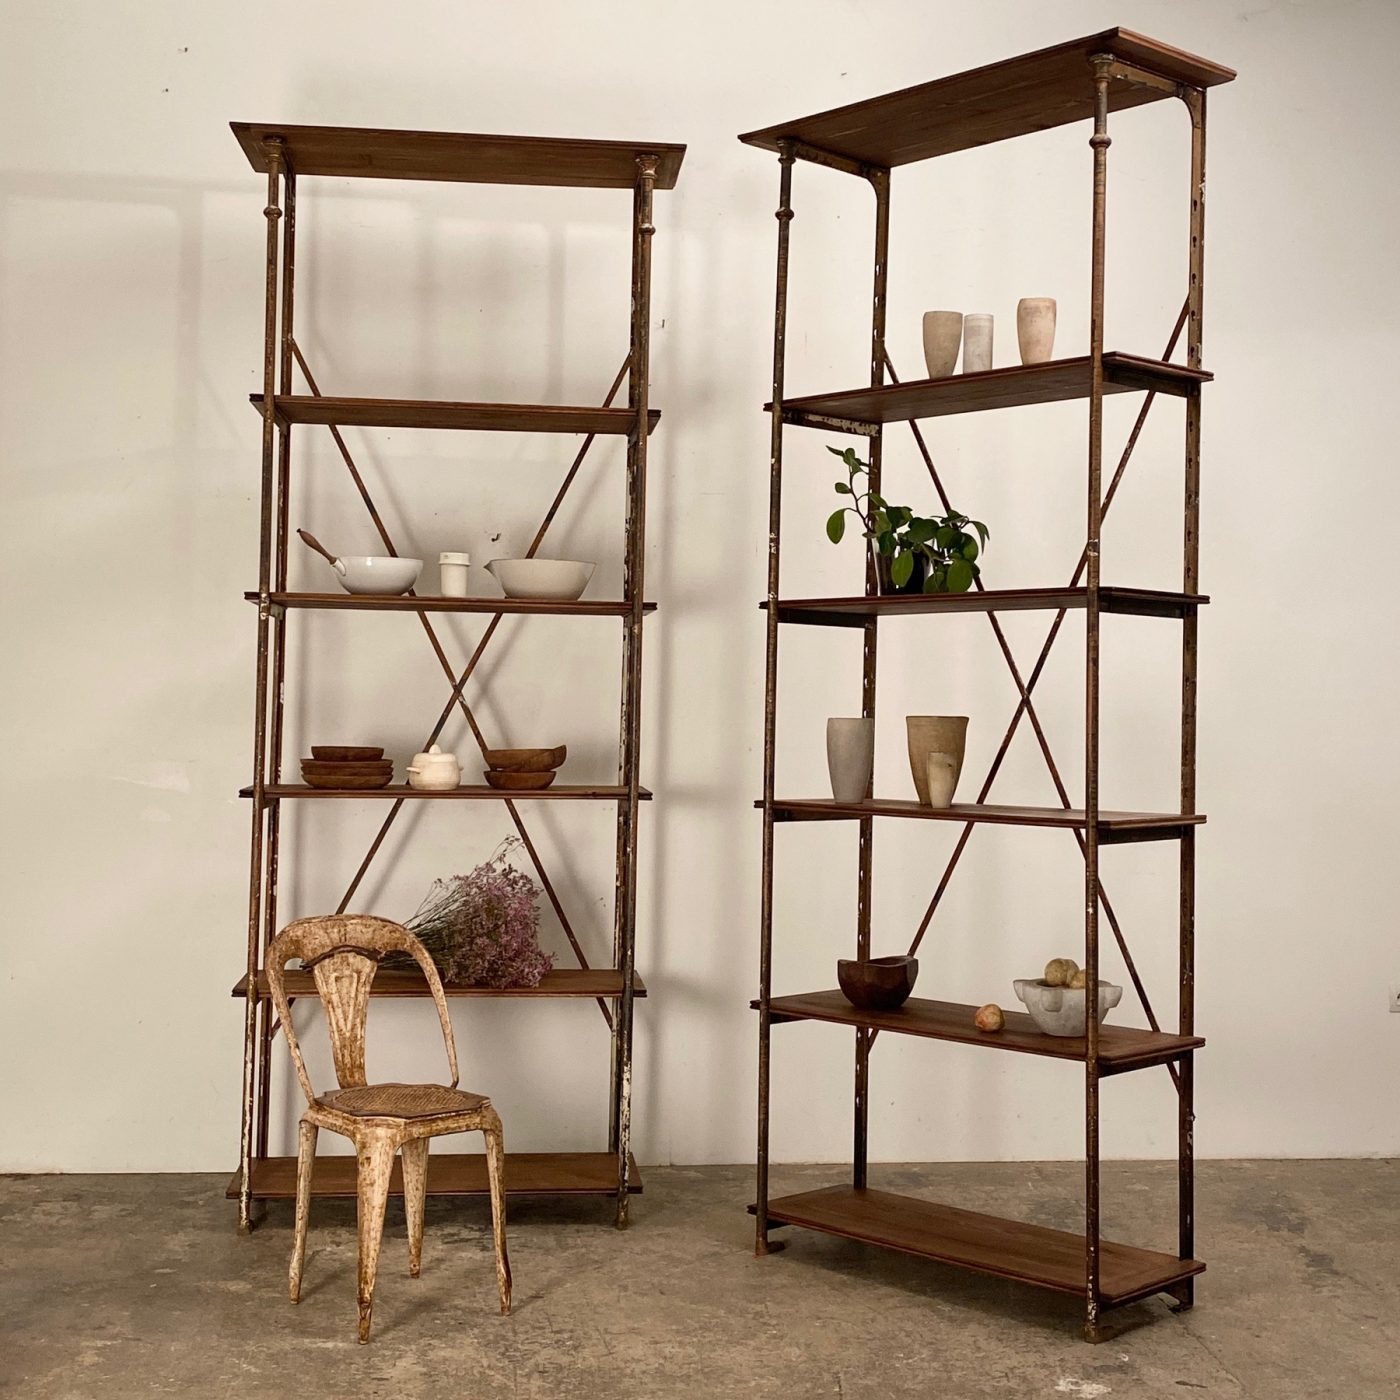 objet-vagabond-industrial-shelves0005